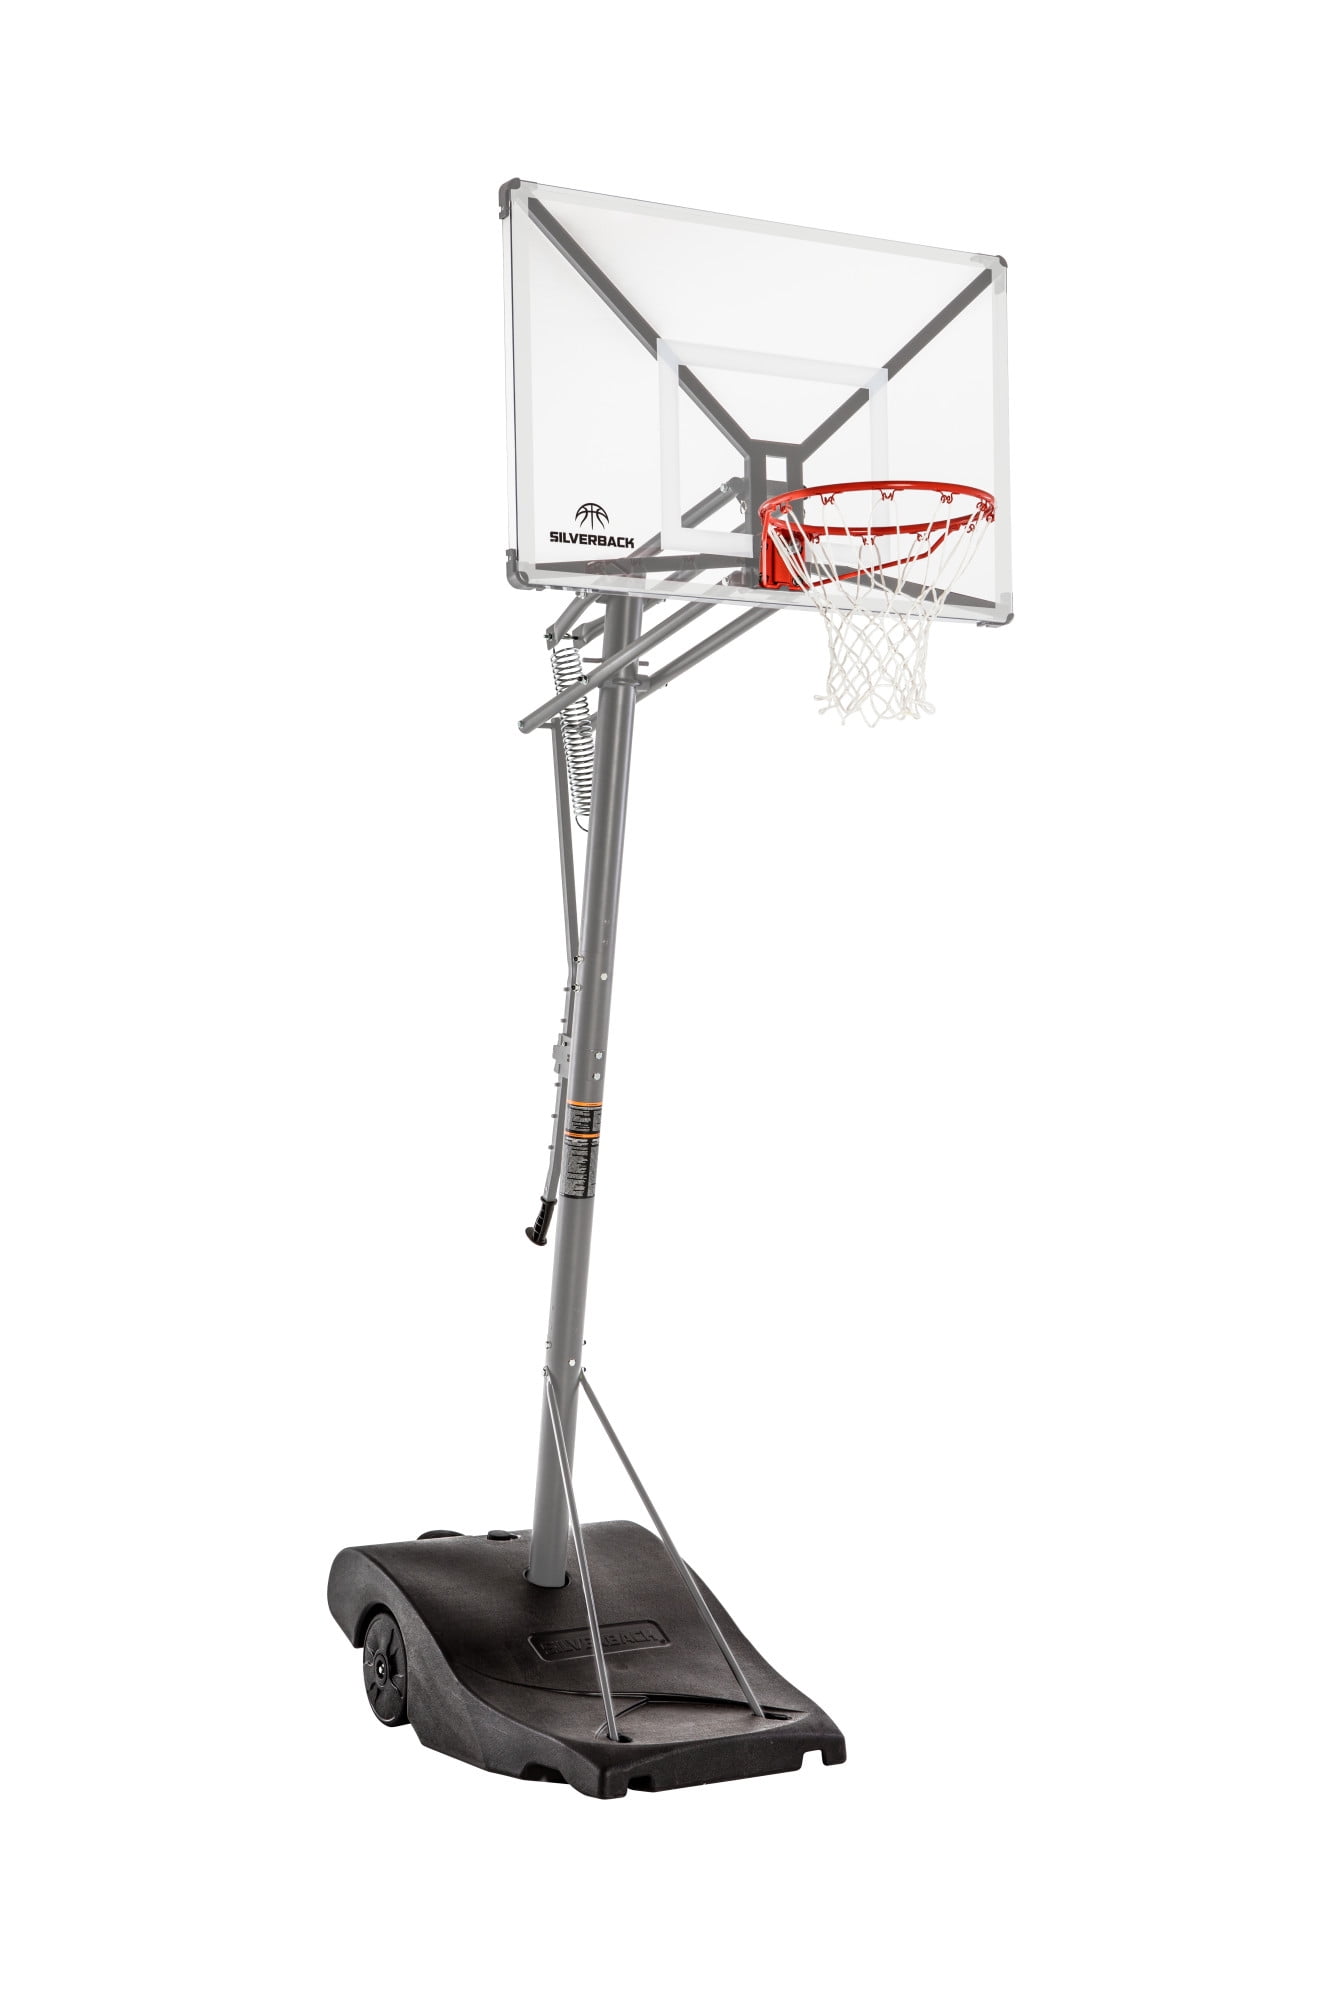 Silverback SBX 50 In. Basketball System Height-Adjustable Backboard Portable Hoop